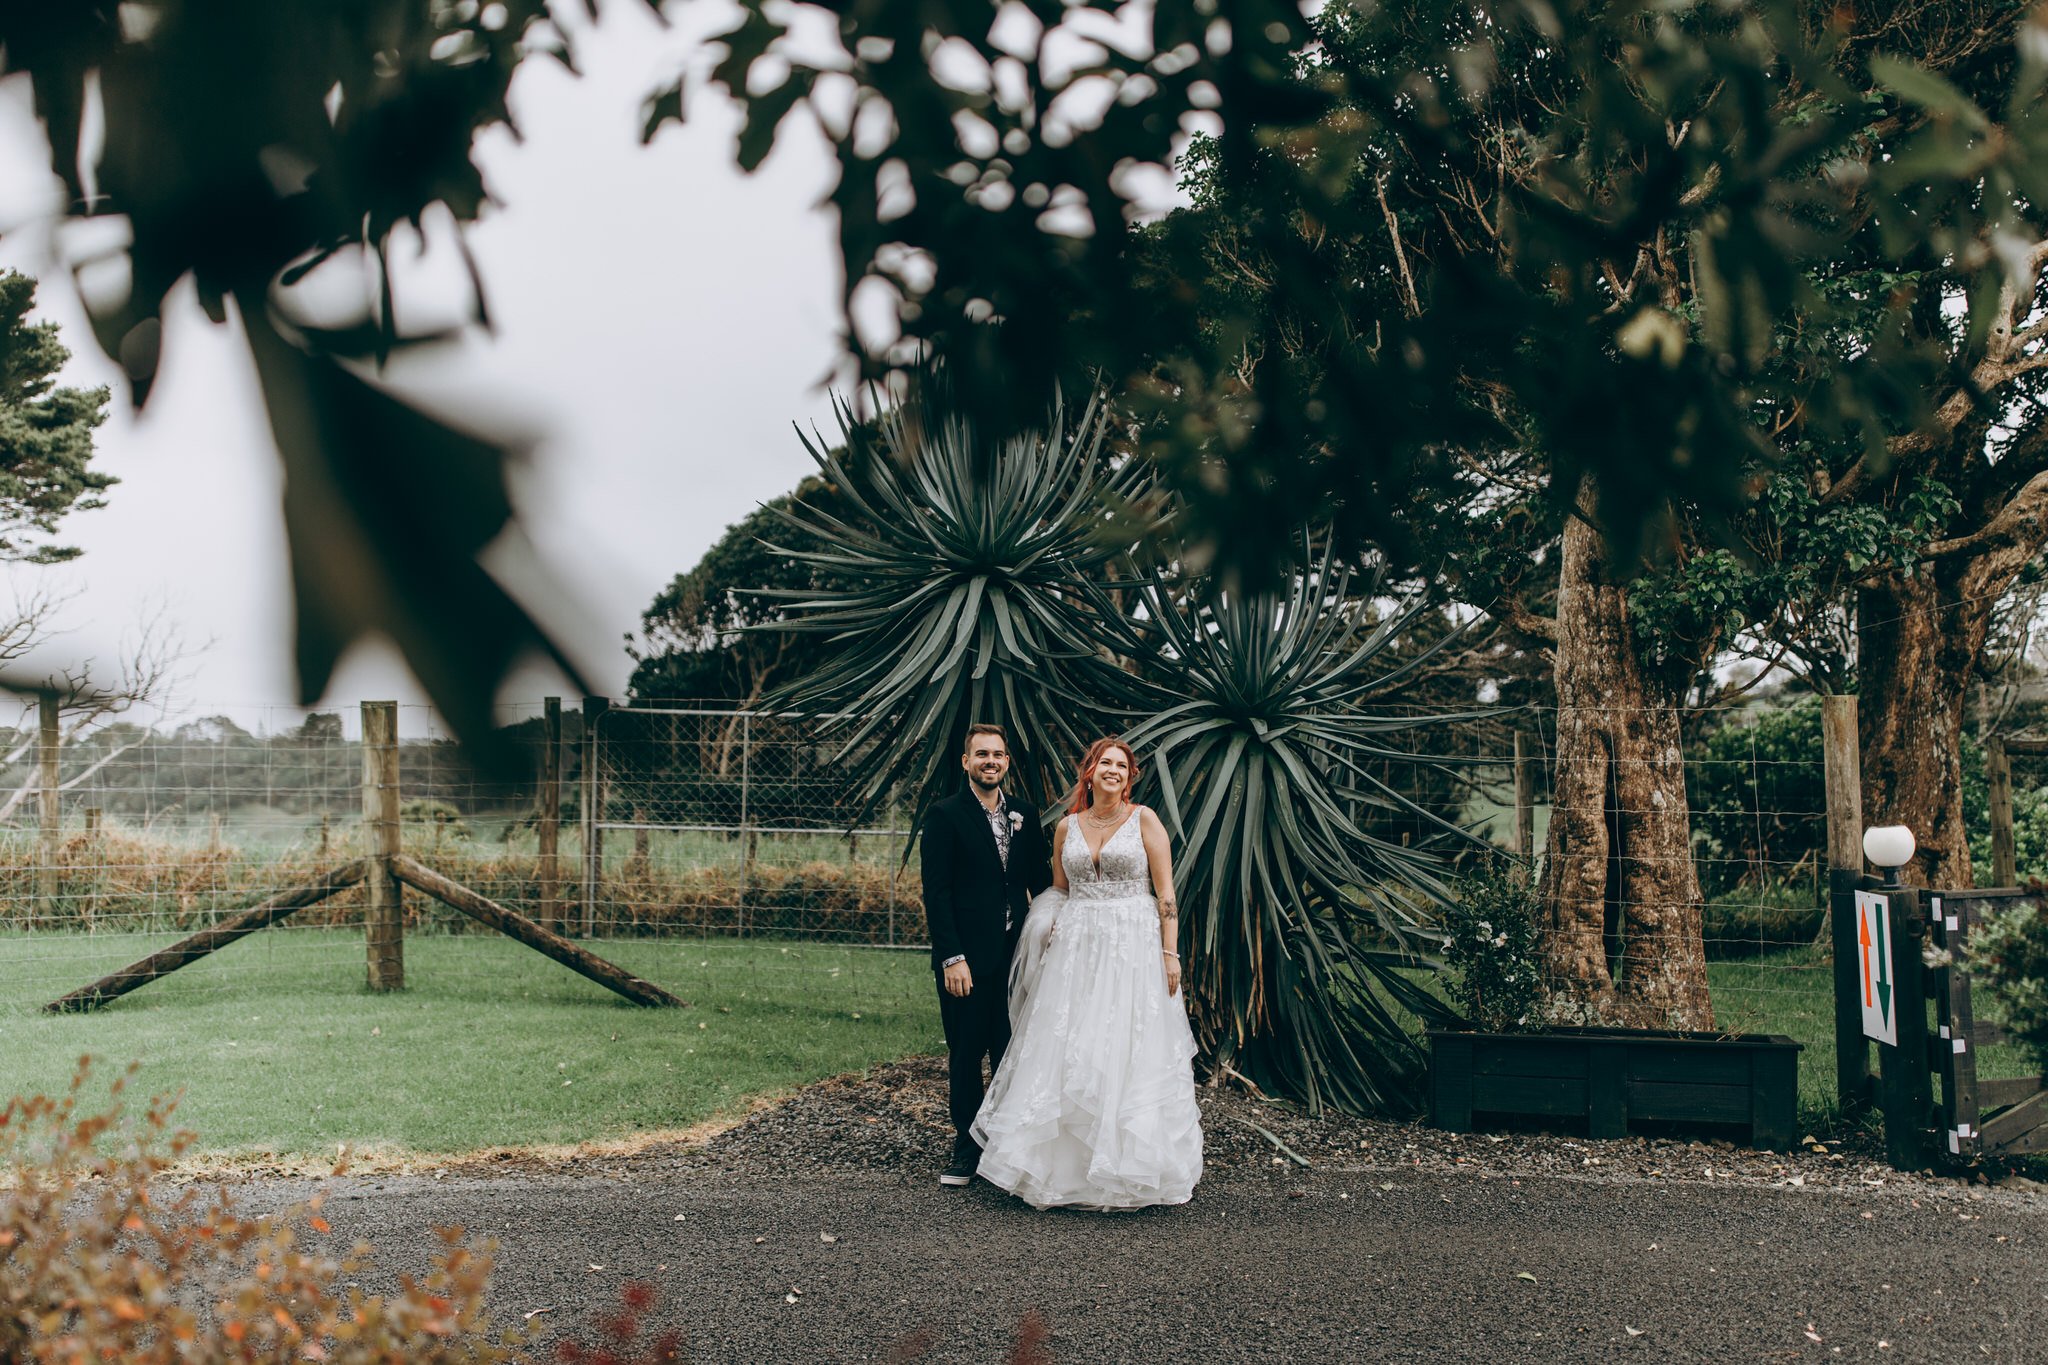 Connemara Country lodge Auckland wedding 13.jpg